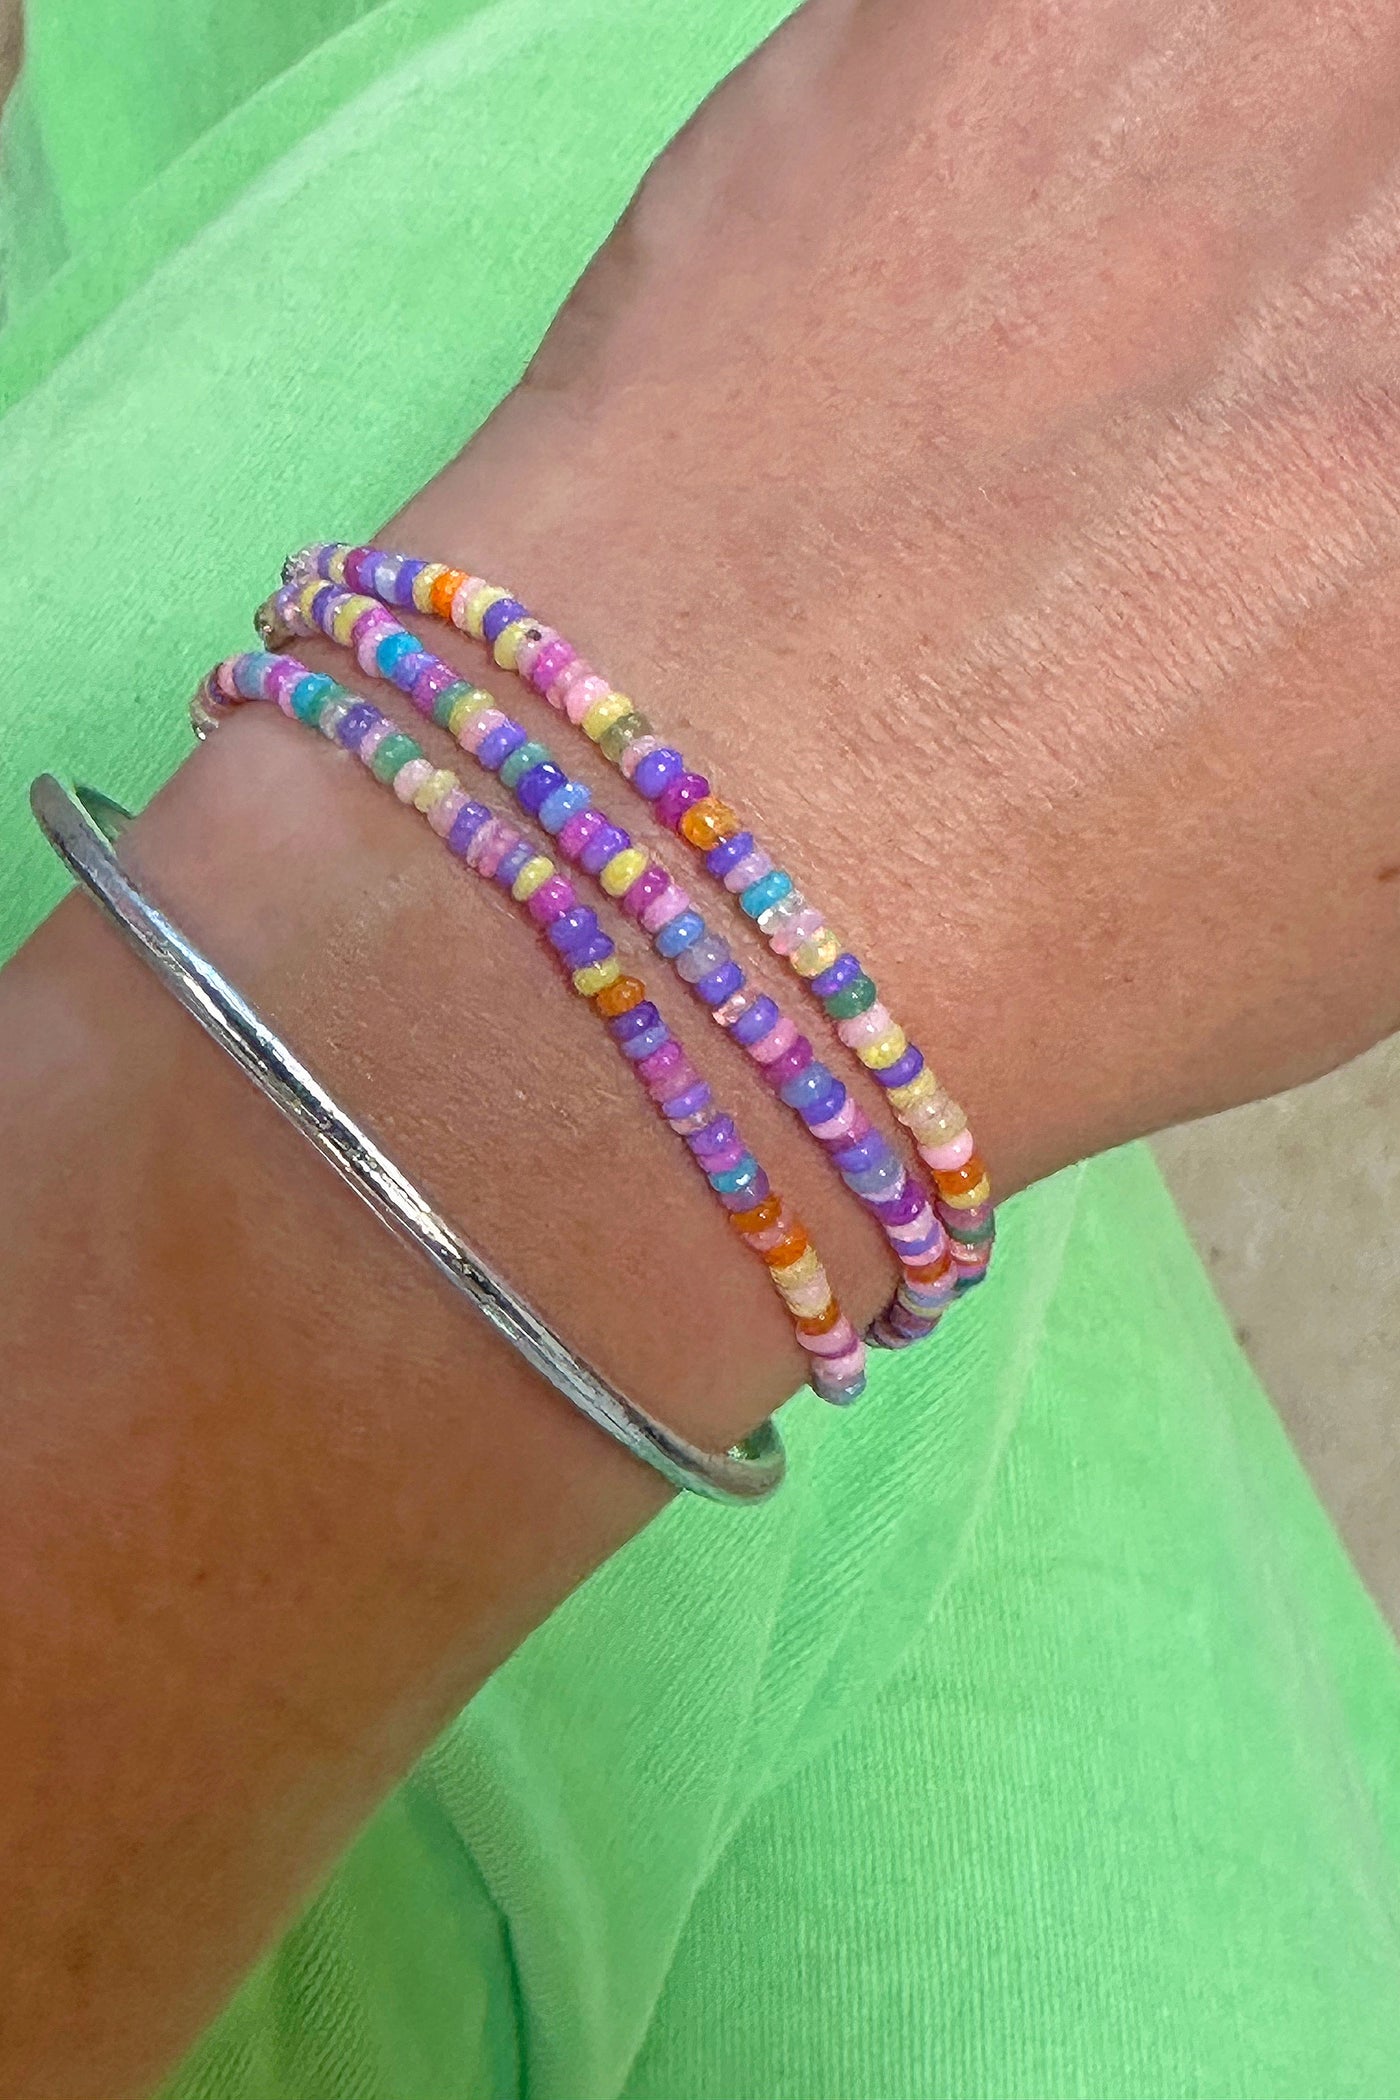 Ethiopian Opal & Sterling Silver Bead Bracelet, Adjustable, Multi Color Rainbow Beaded Gemstone Bracelet